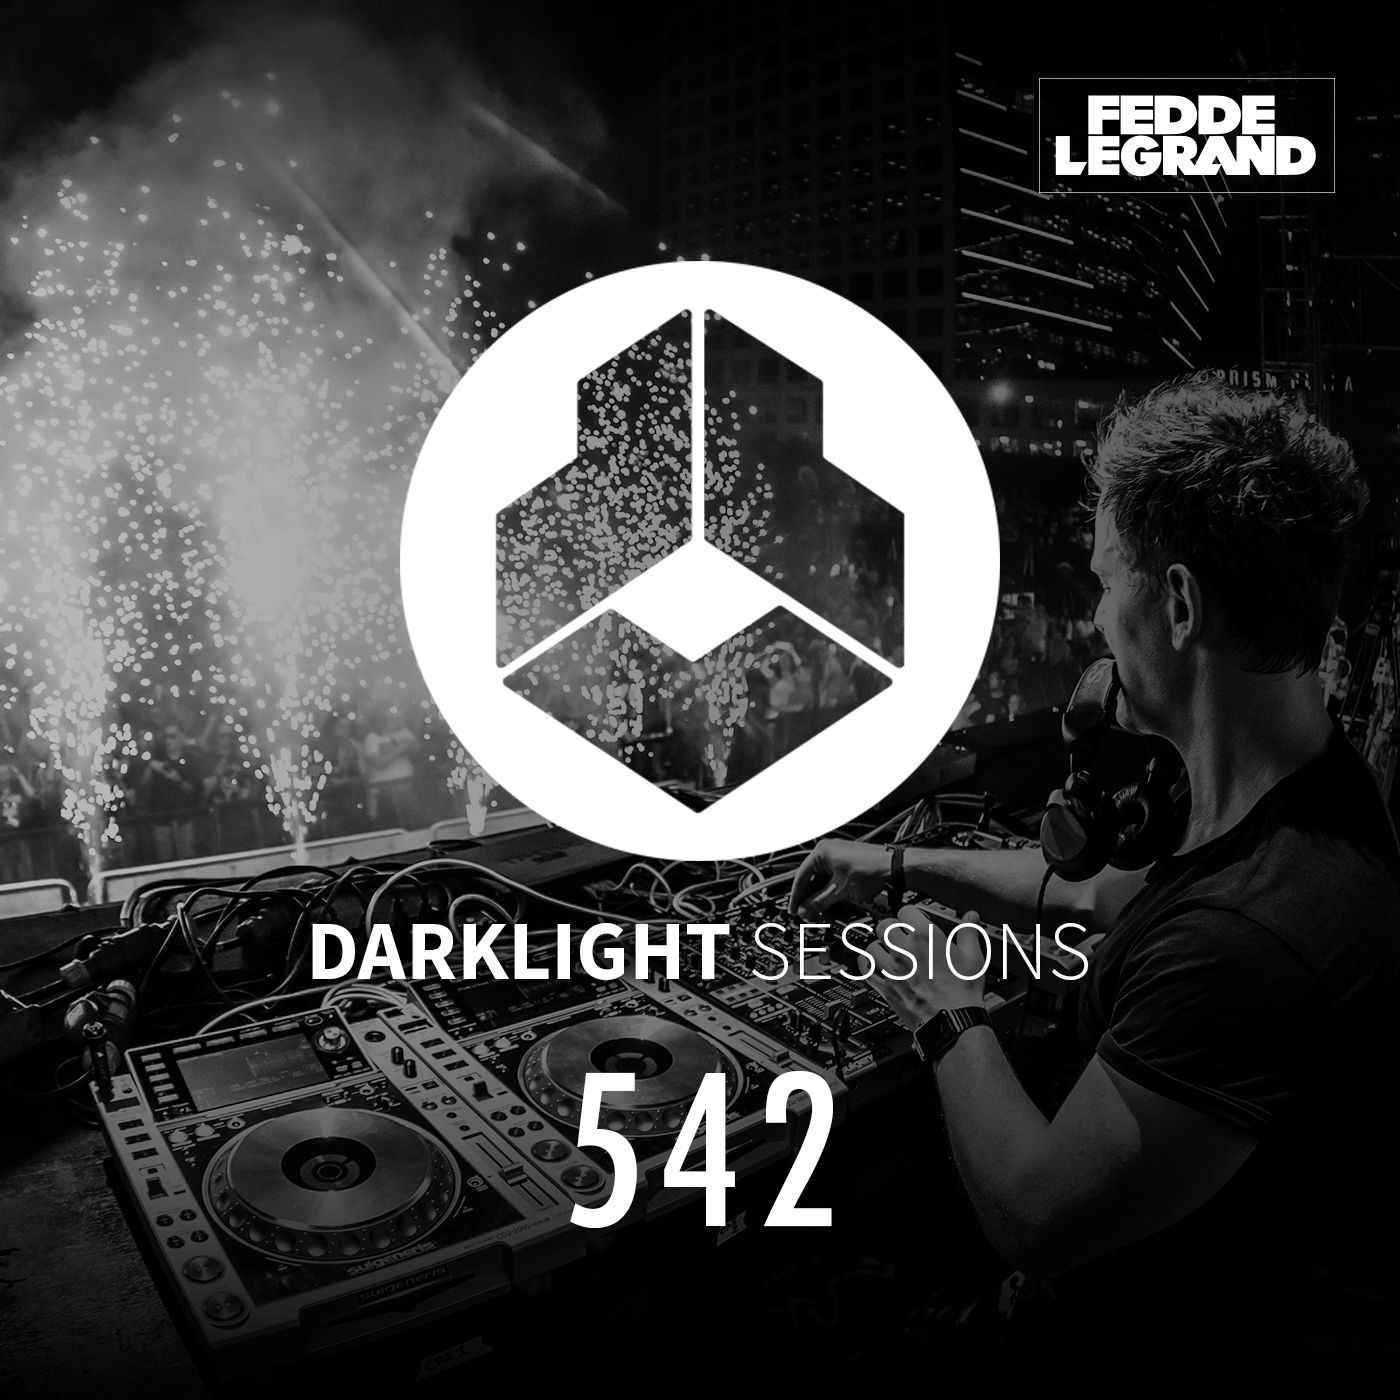 Darklight Sessions 542